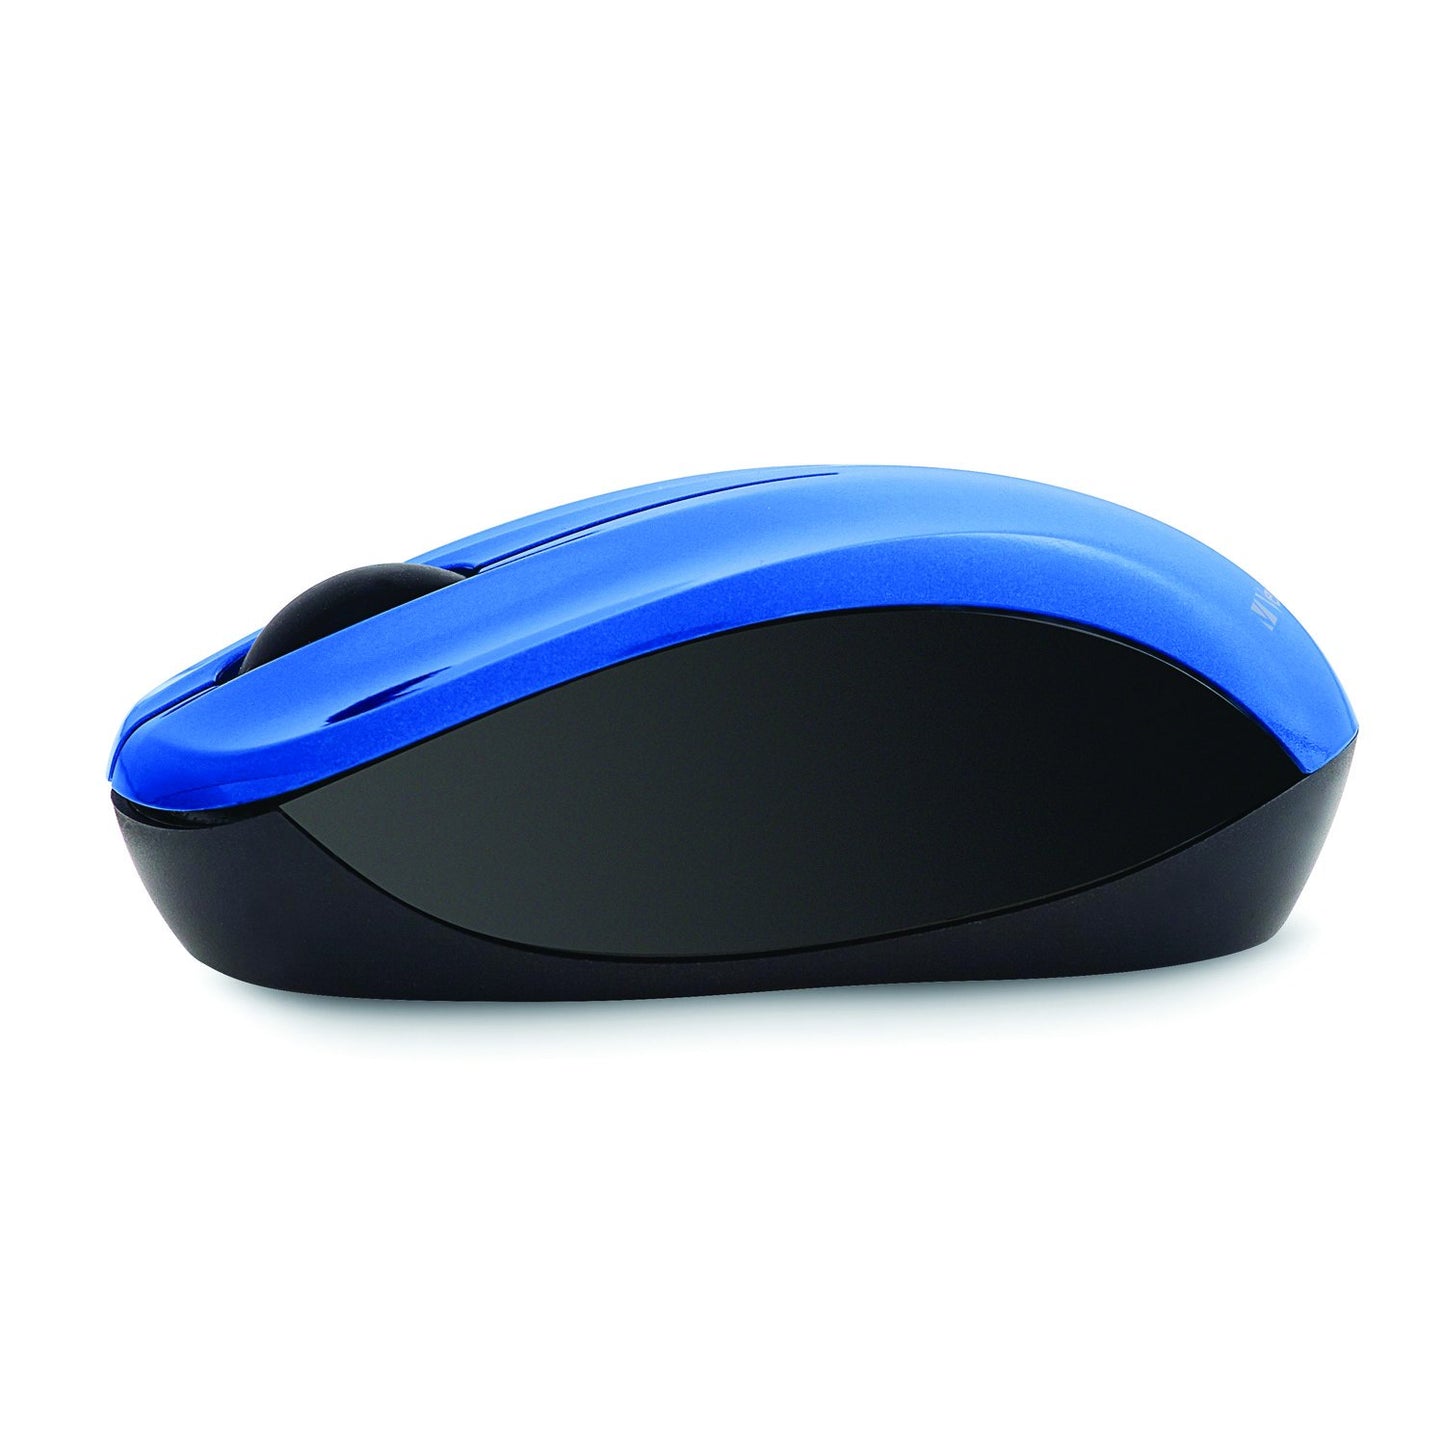 Verbatim 99770 Silent Wireless Blue-LED Mouse (Blue & Black)